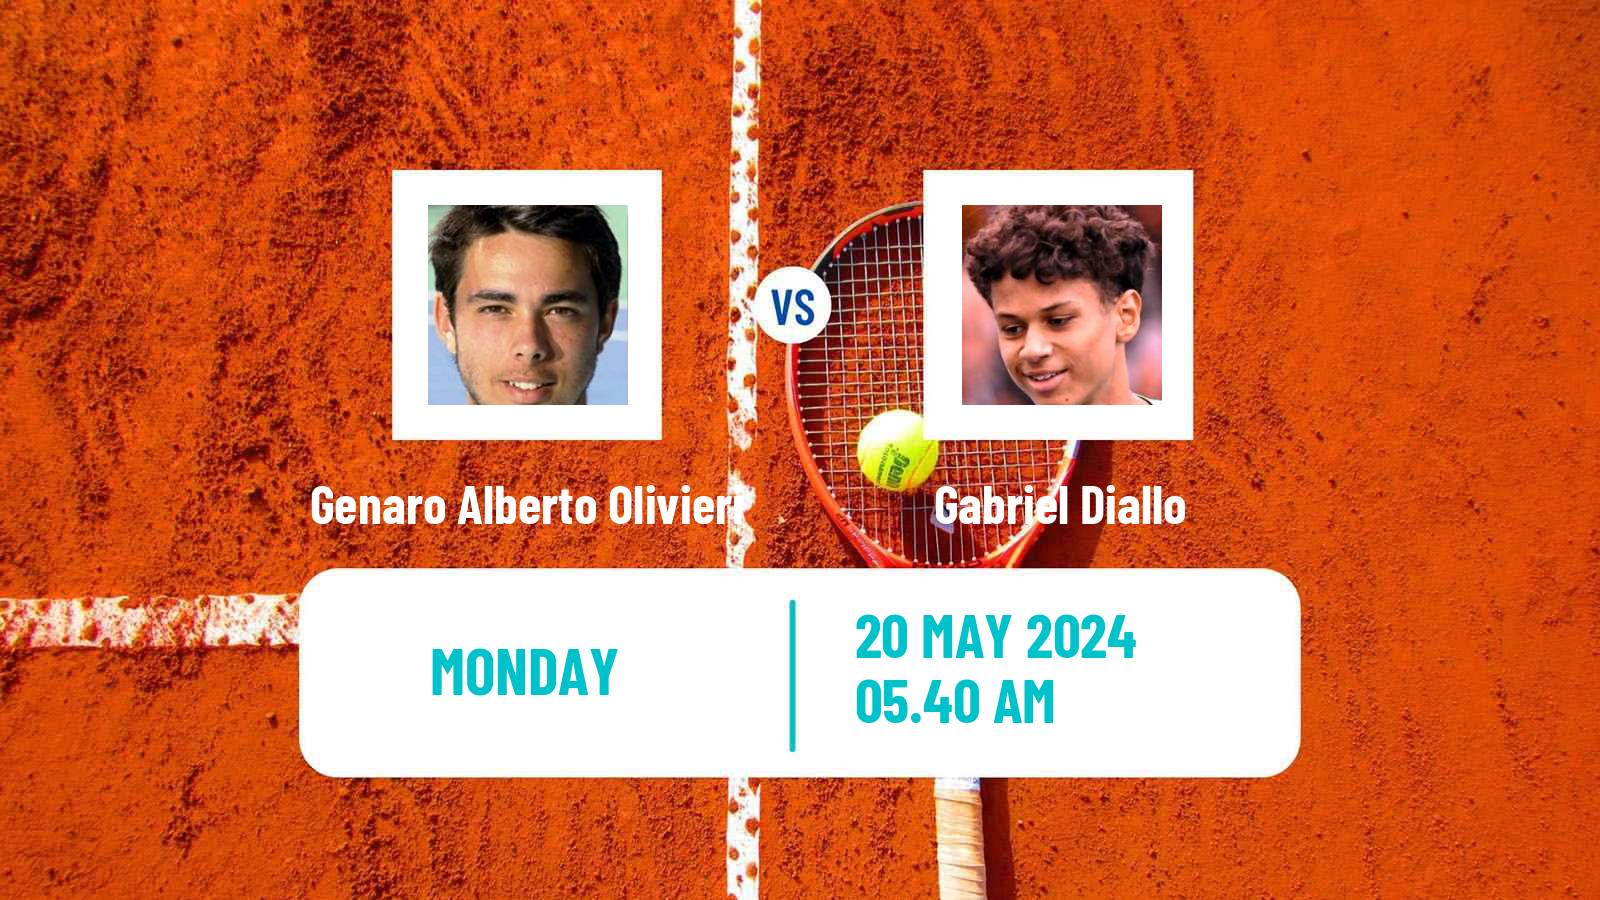 Tennis ATP Roland Garros Genaro Alberto Olivieri - Gabriel Diallo